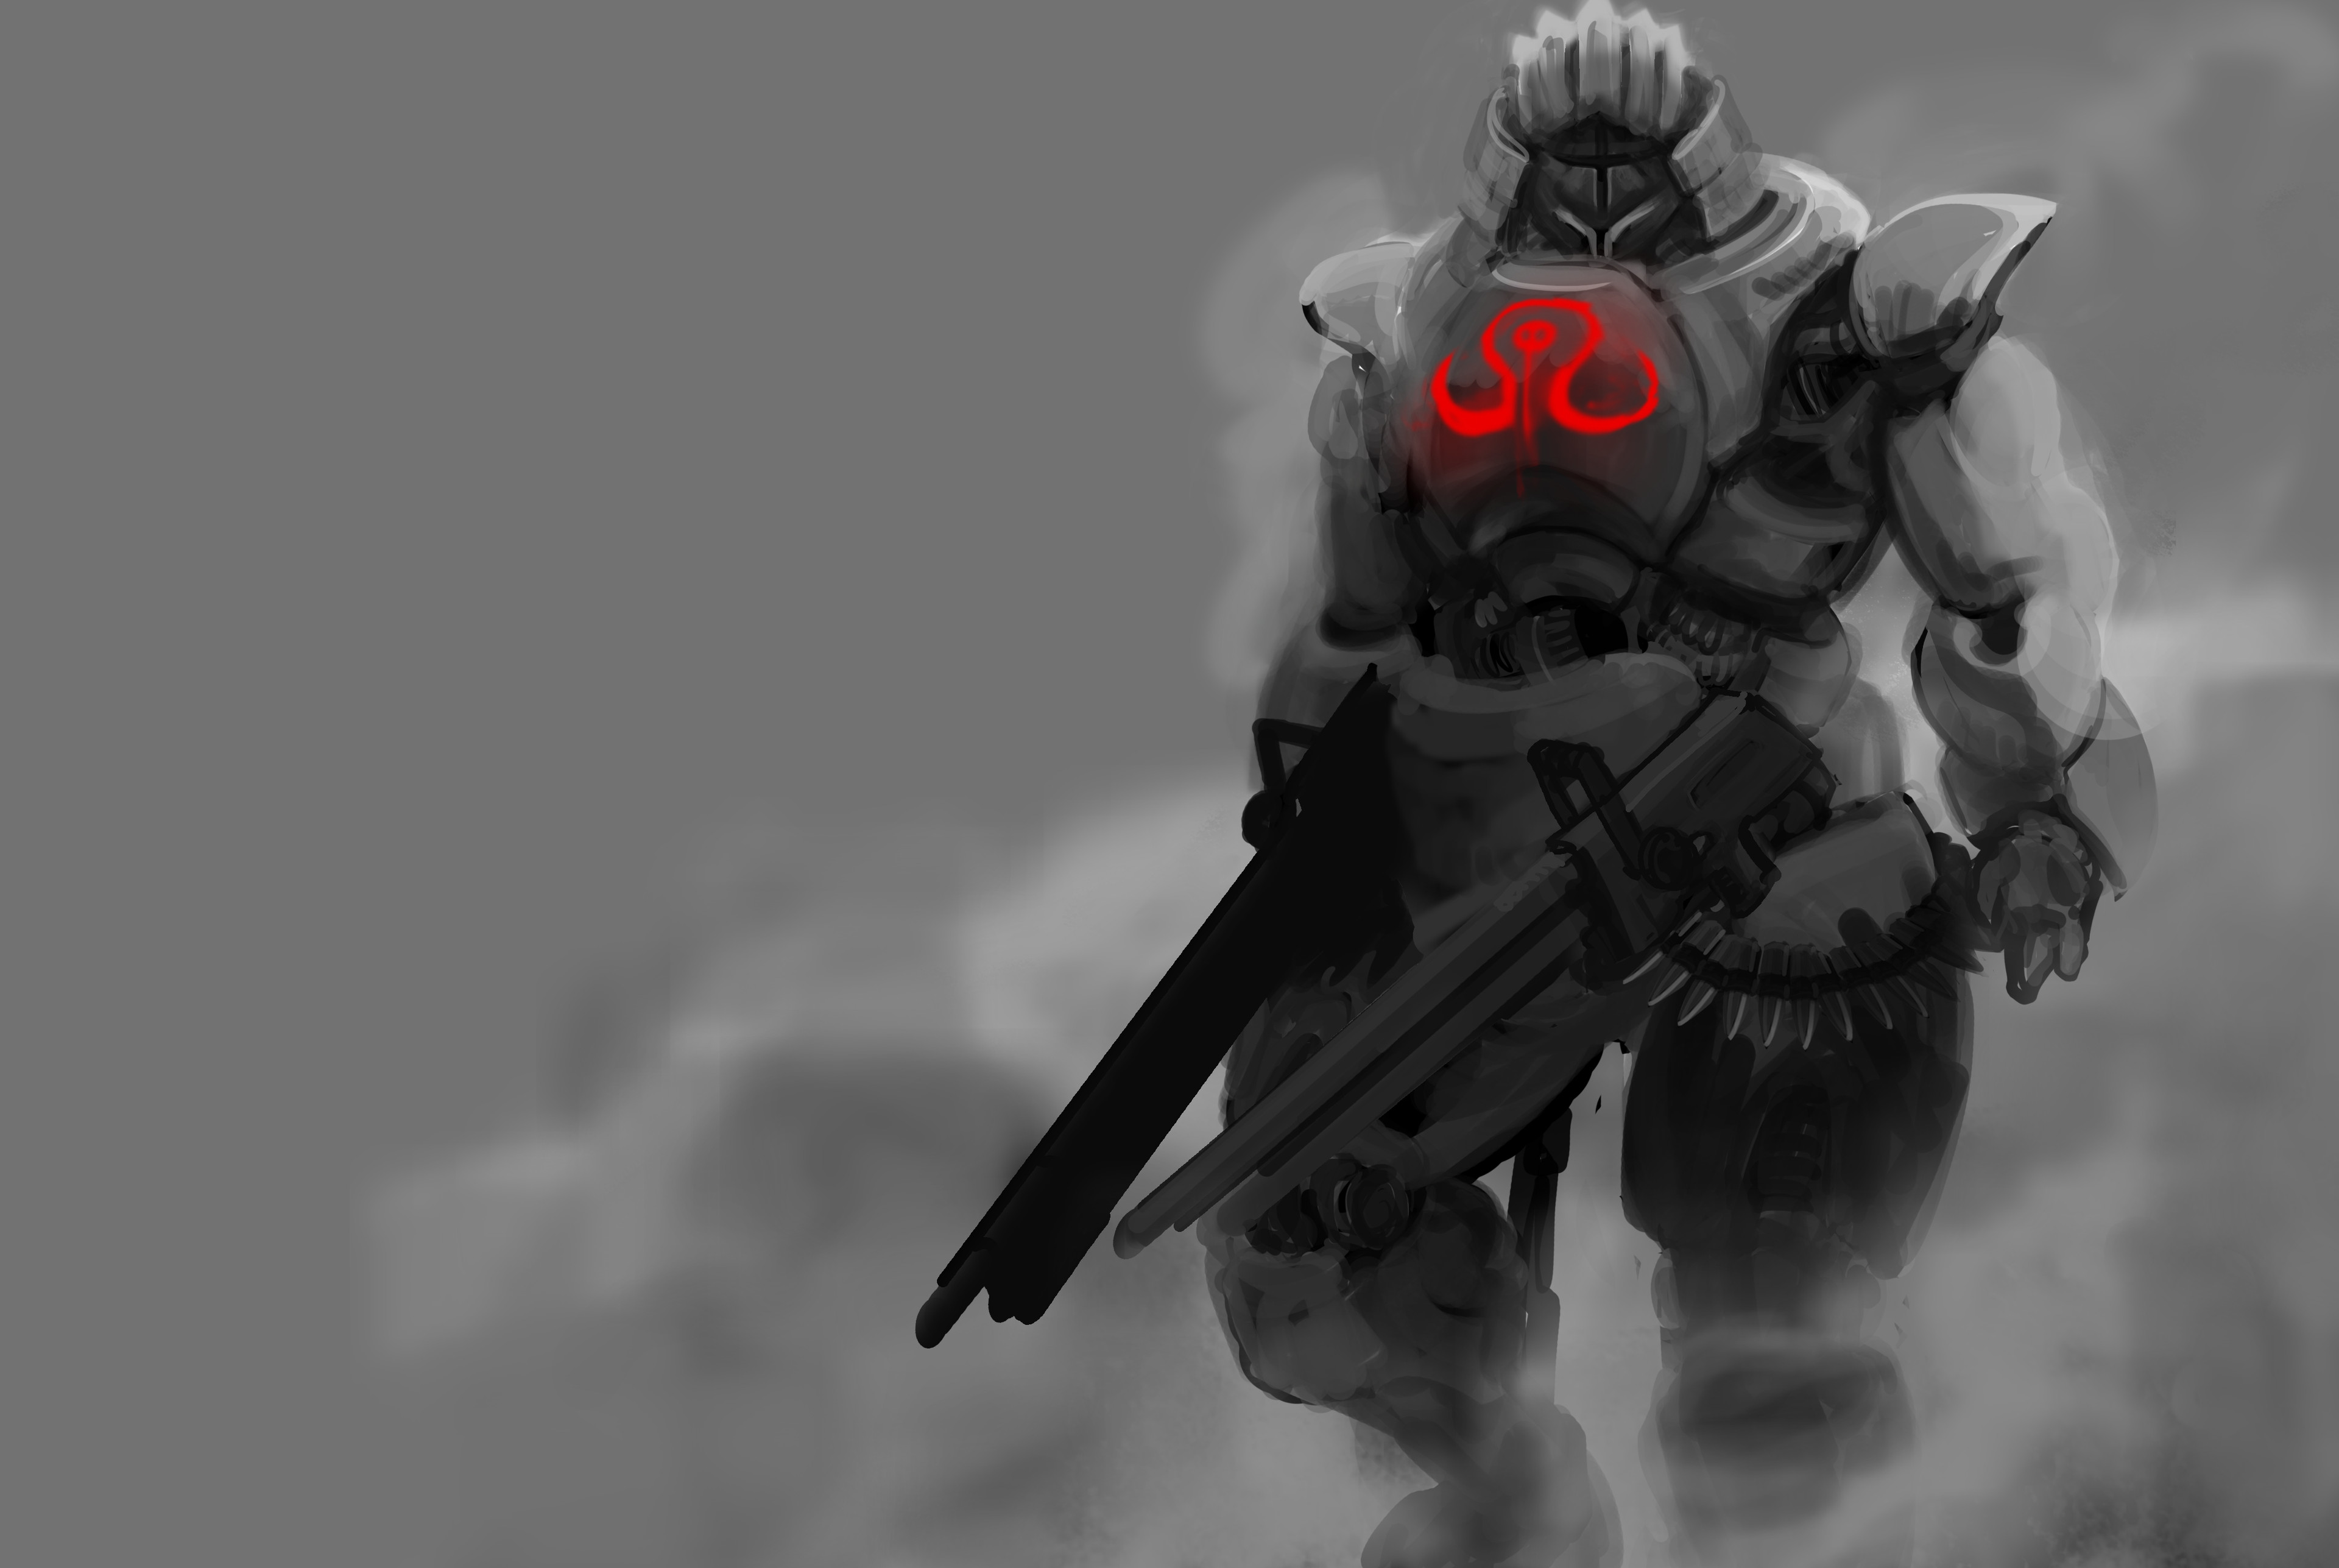 General 3840x2574 soldier red black smoke gun science fiction fantasy art armor simple background